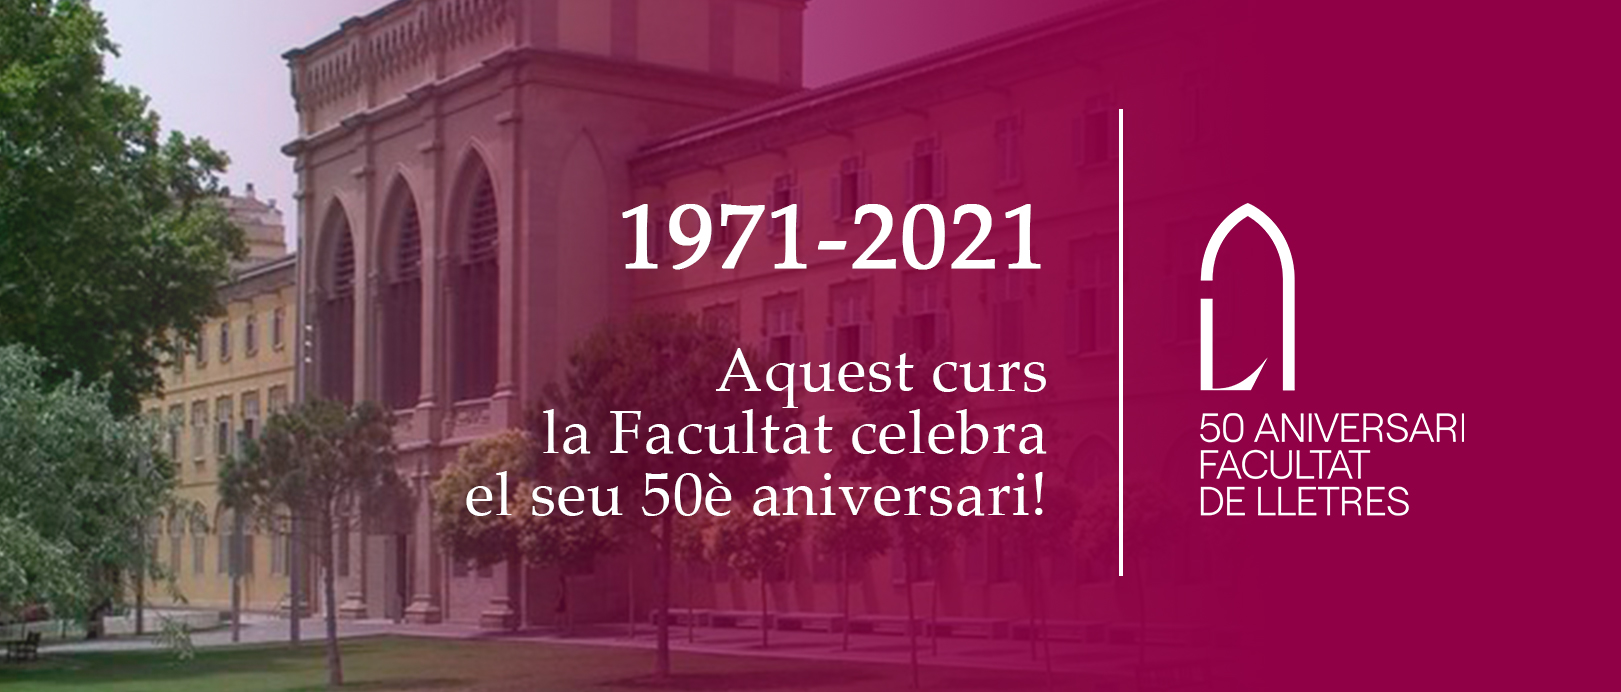 Banner 50 aniversari-FacultatdeLletres-web